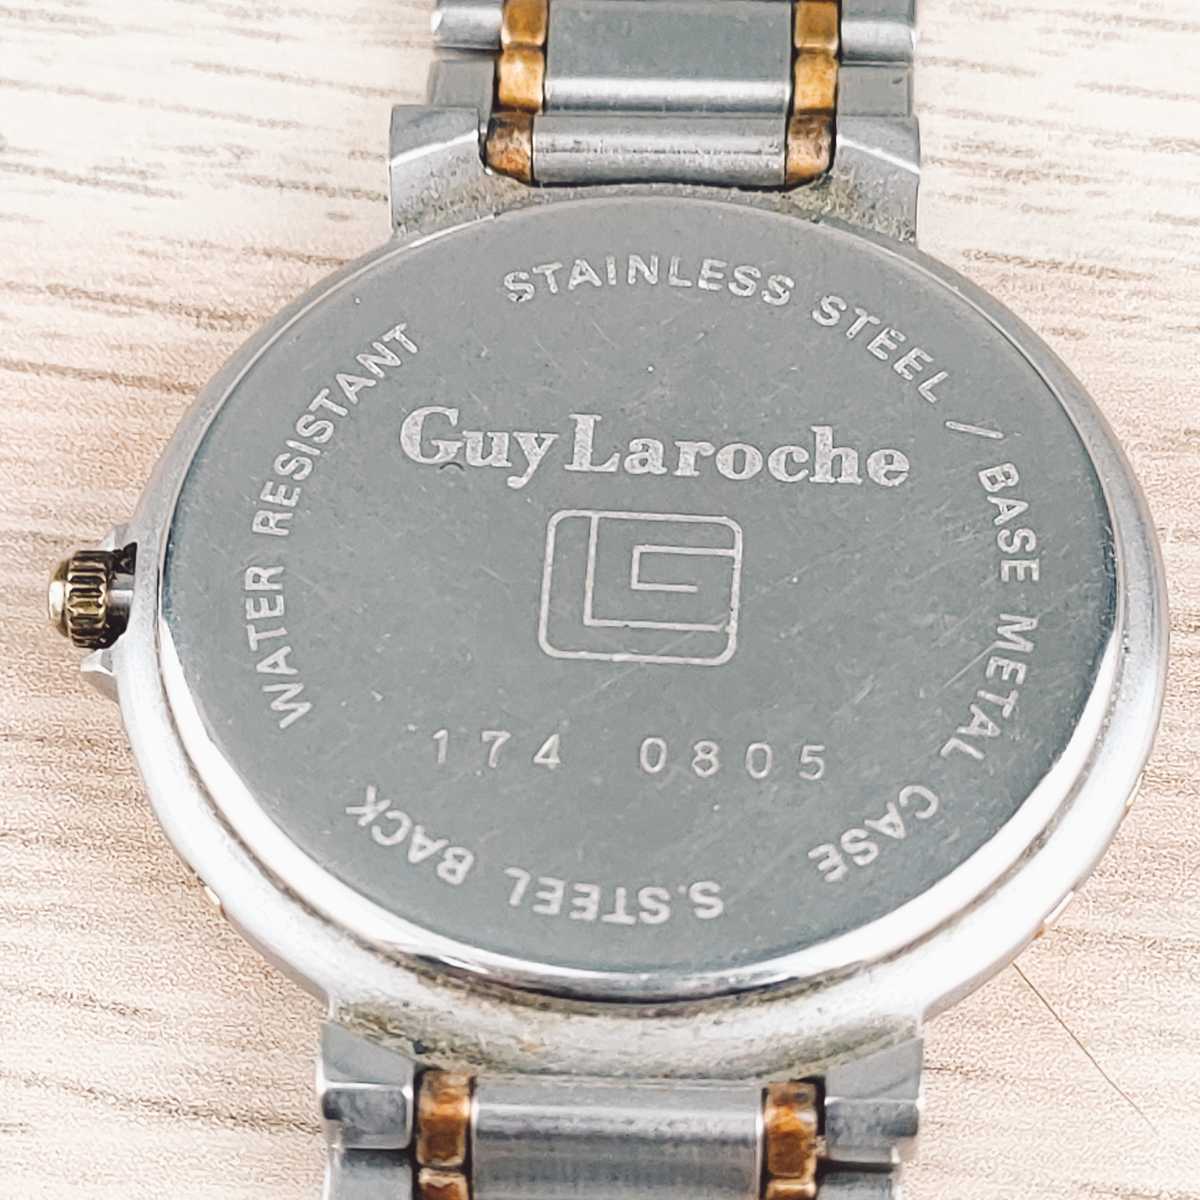 Guy Larochegila Rossi . wristwatch analogue k War tsu174 0805 clock Vintage 3 hands black face lady's accessory calendar 